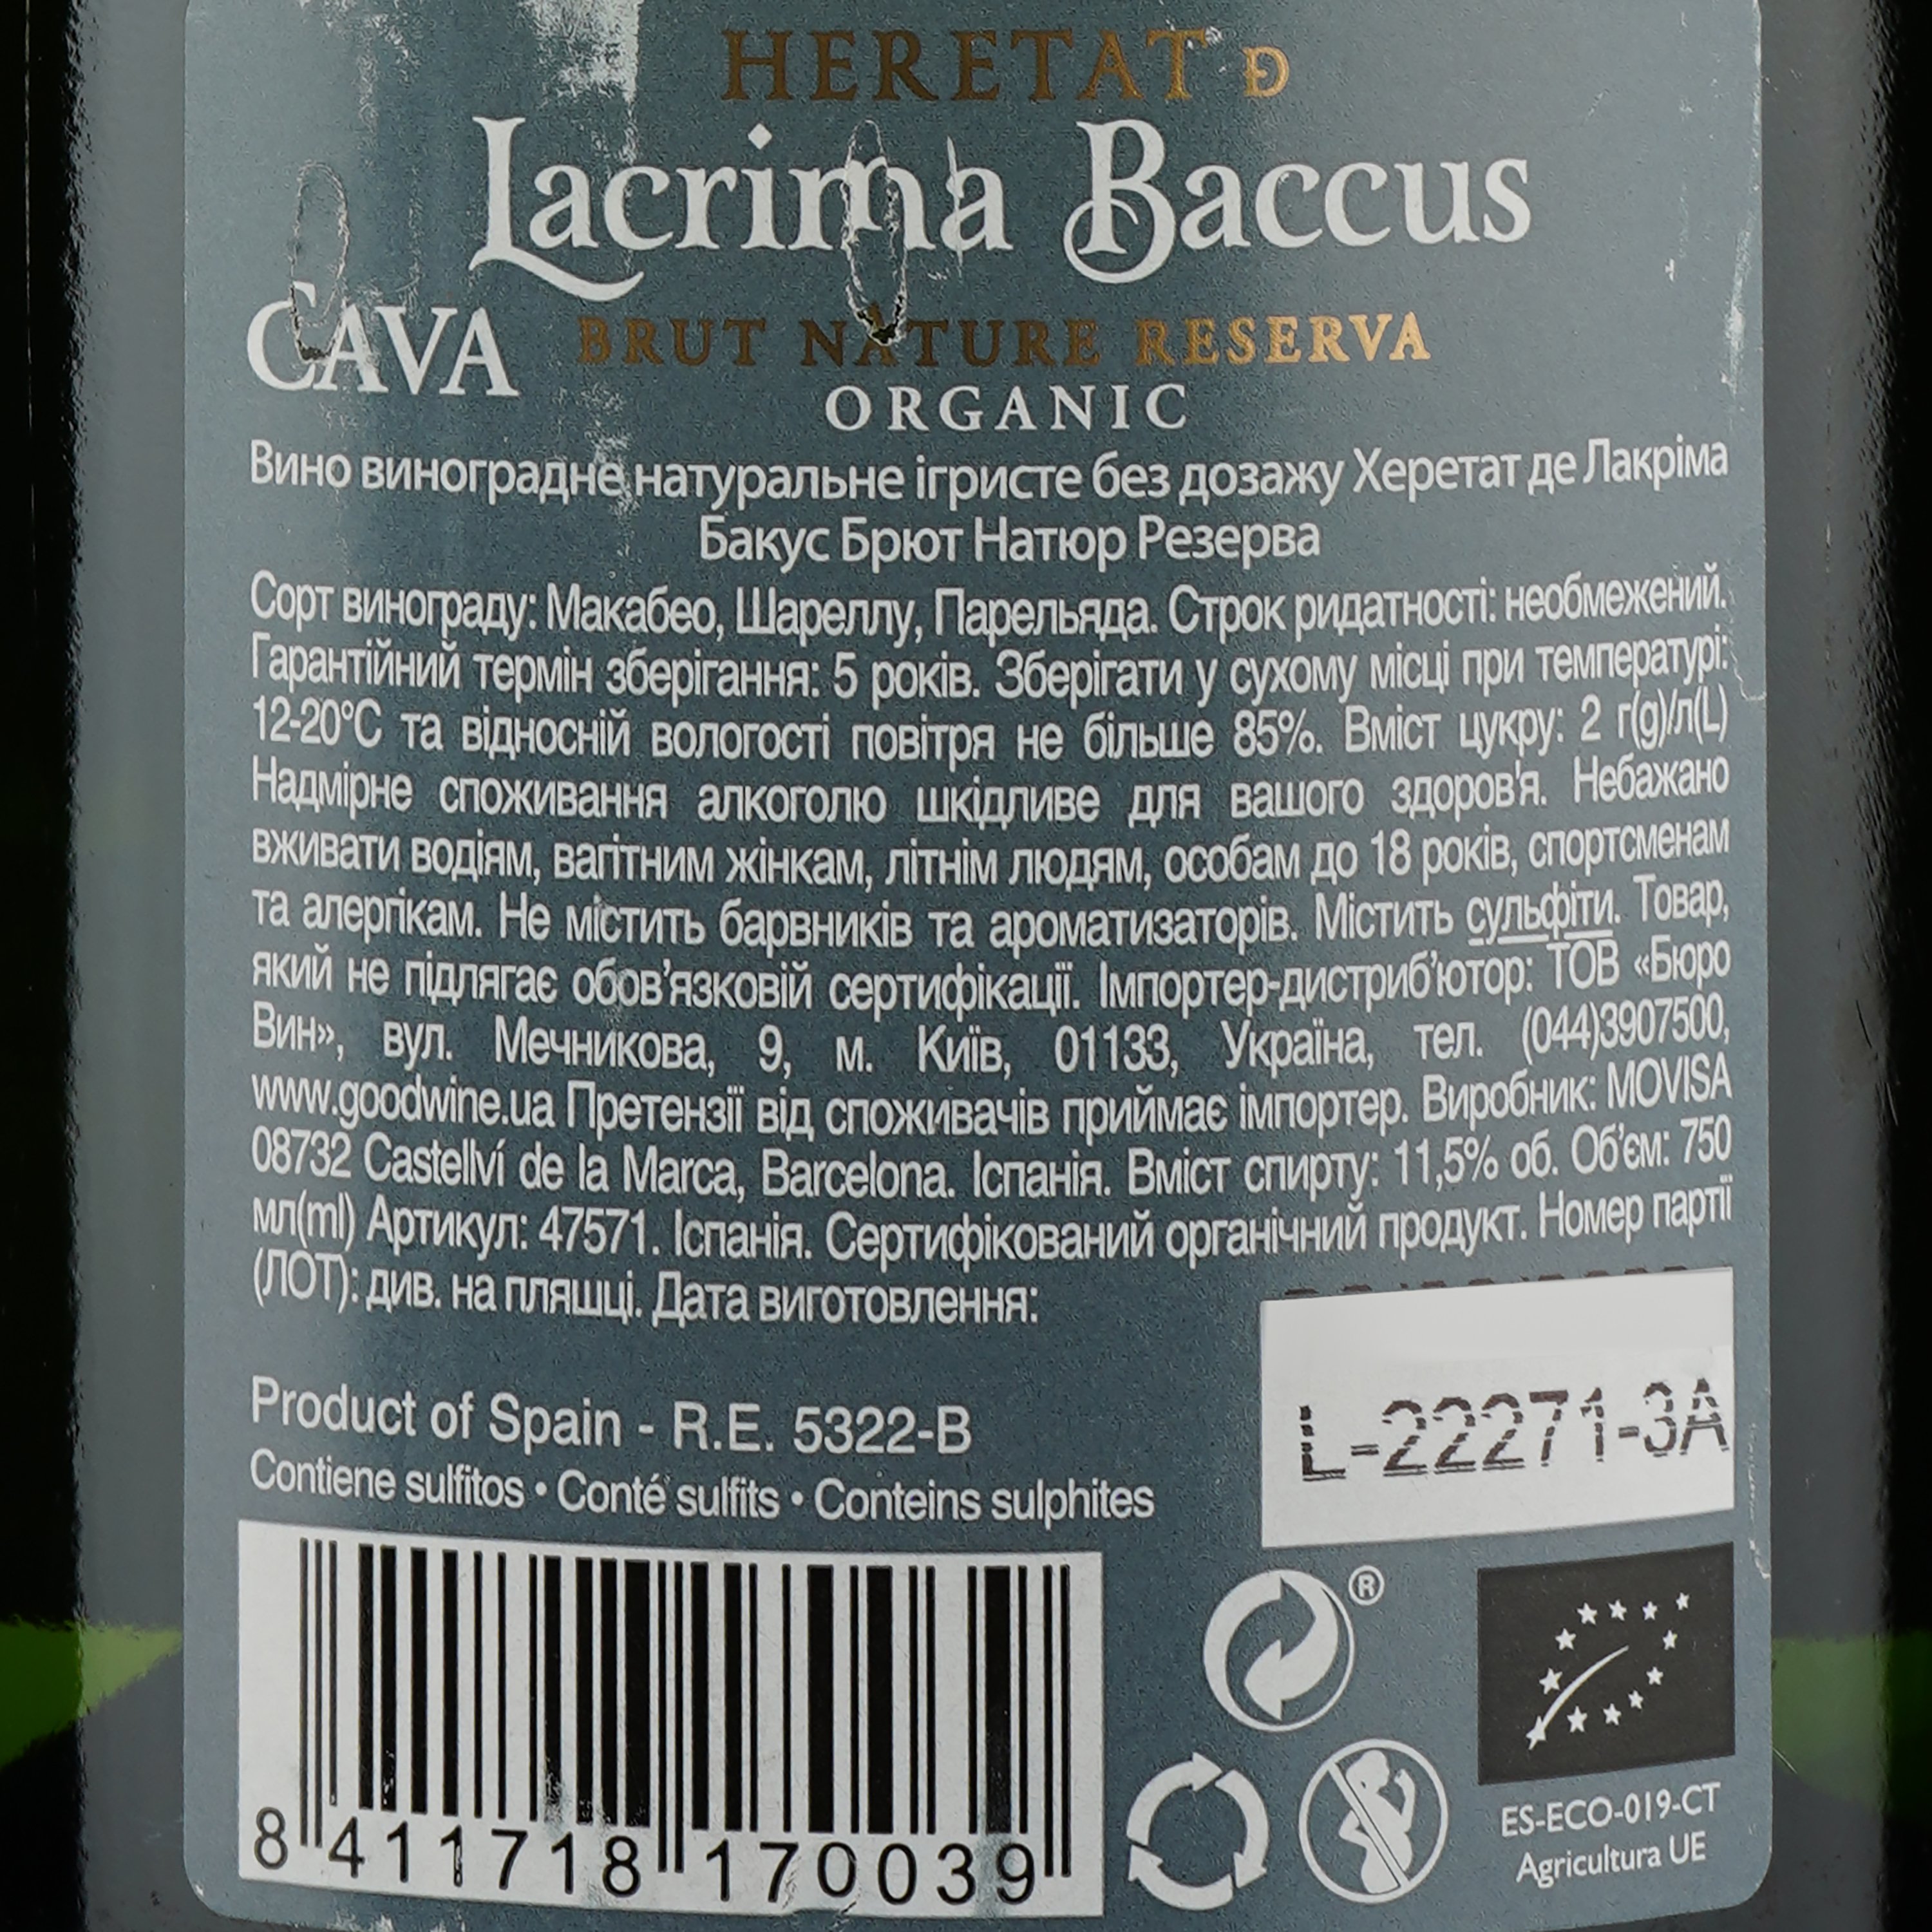 Вино игристое Lacrima Baccus Heretat de Lacrima Baccus Brut Nature Reserva, белое, брют-натюр, 0,75 л - фото 3